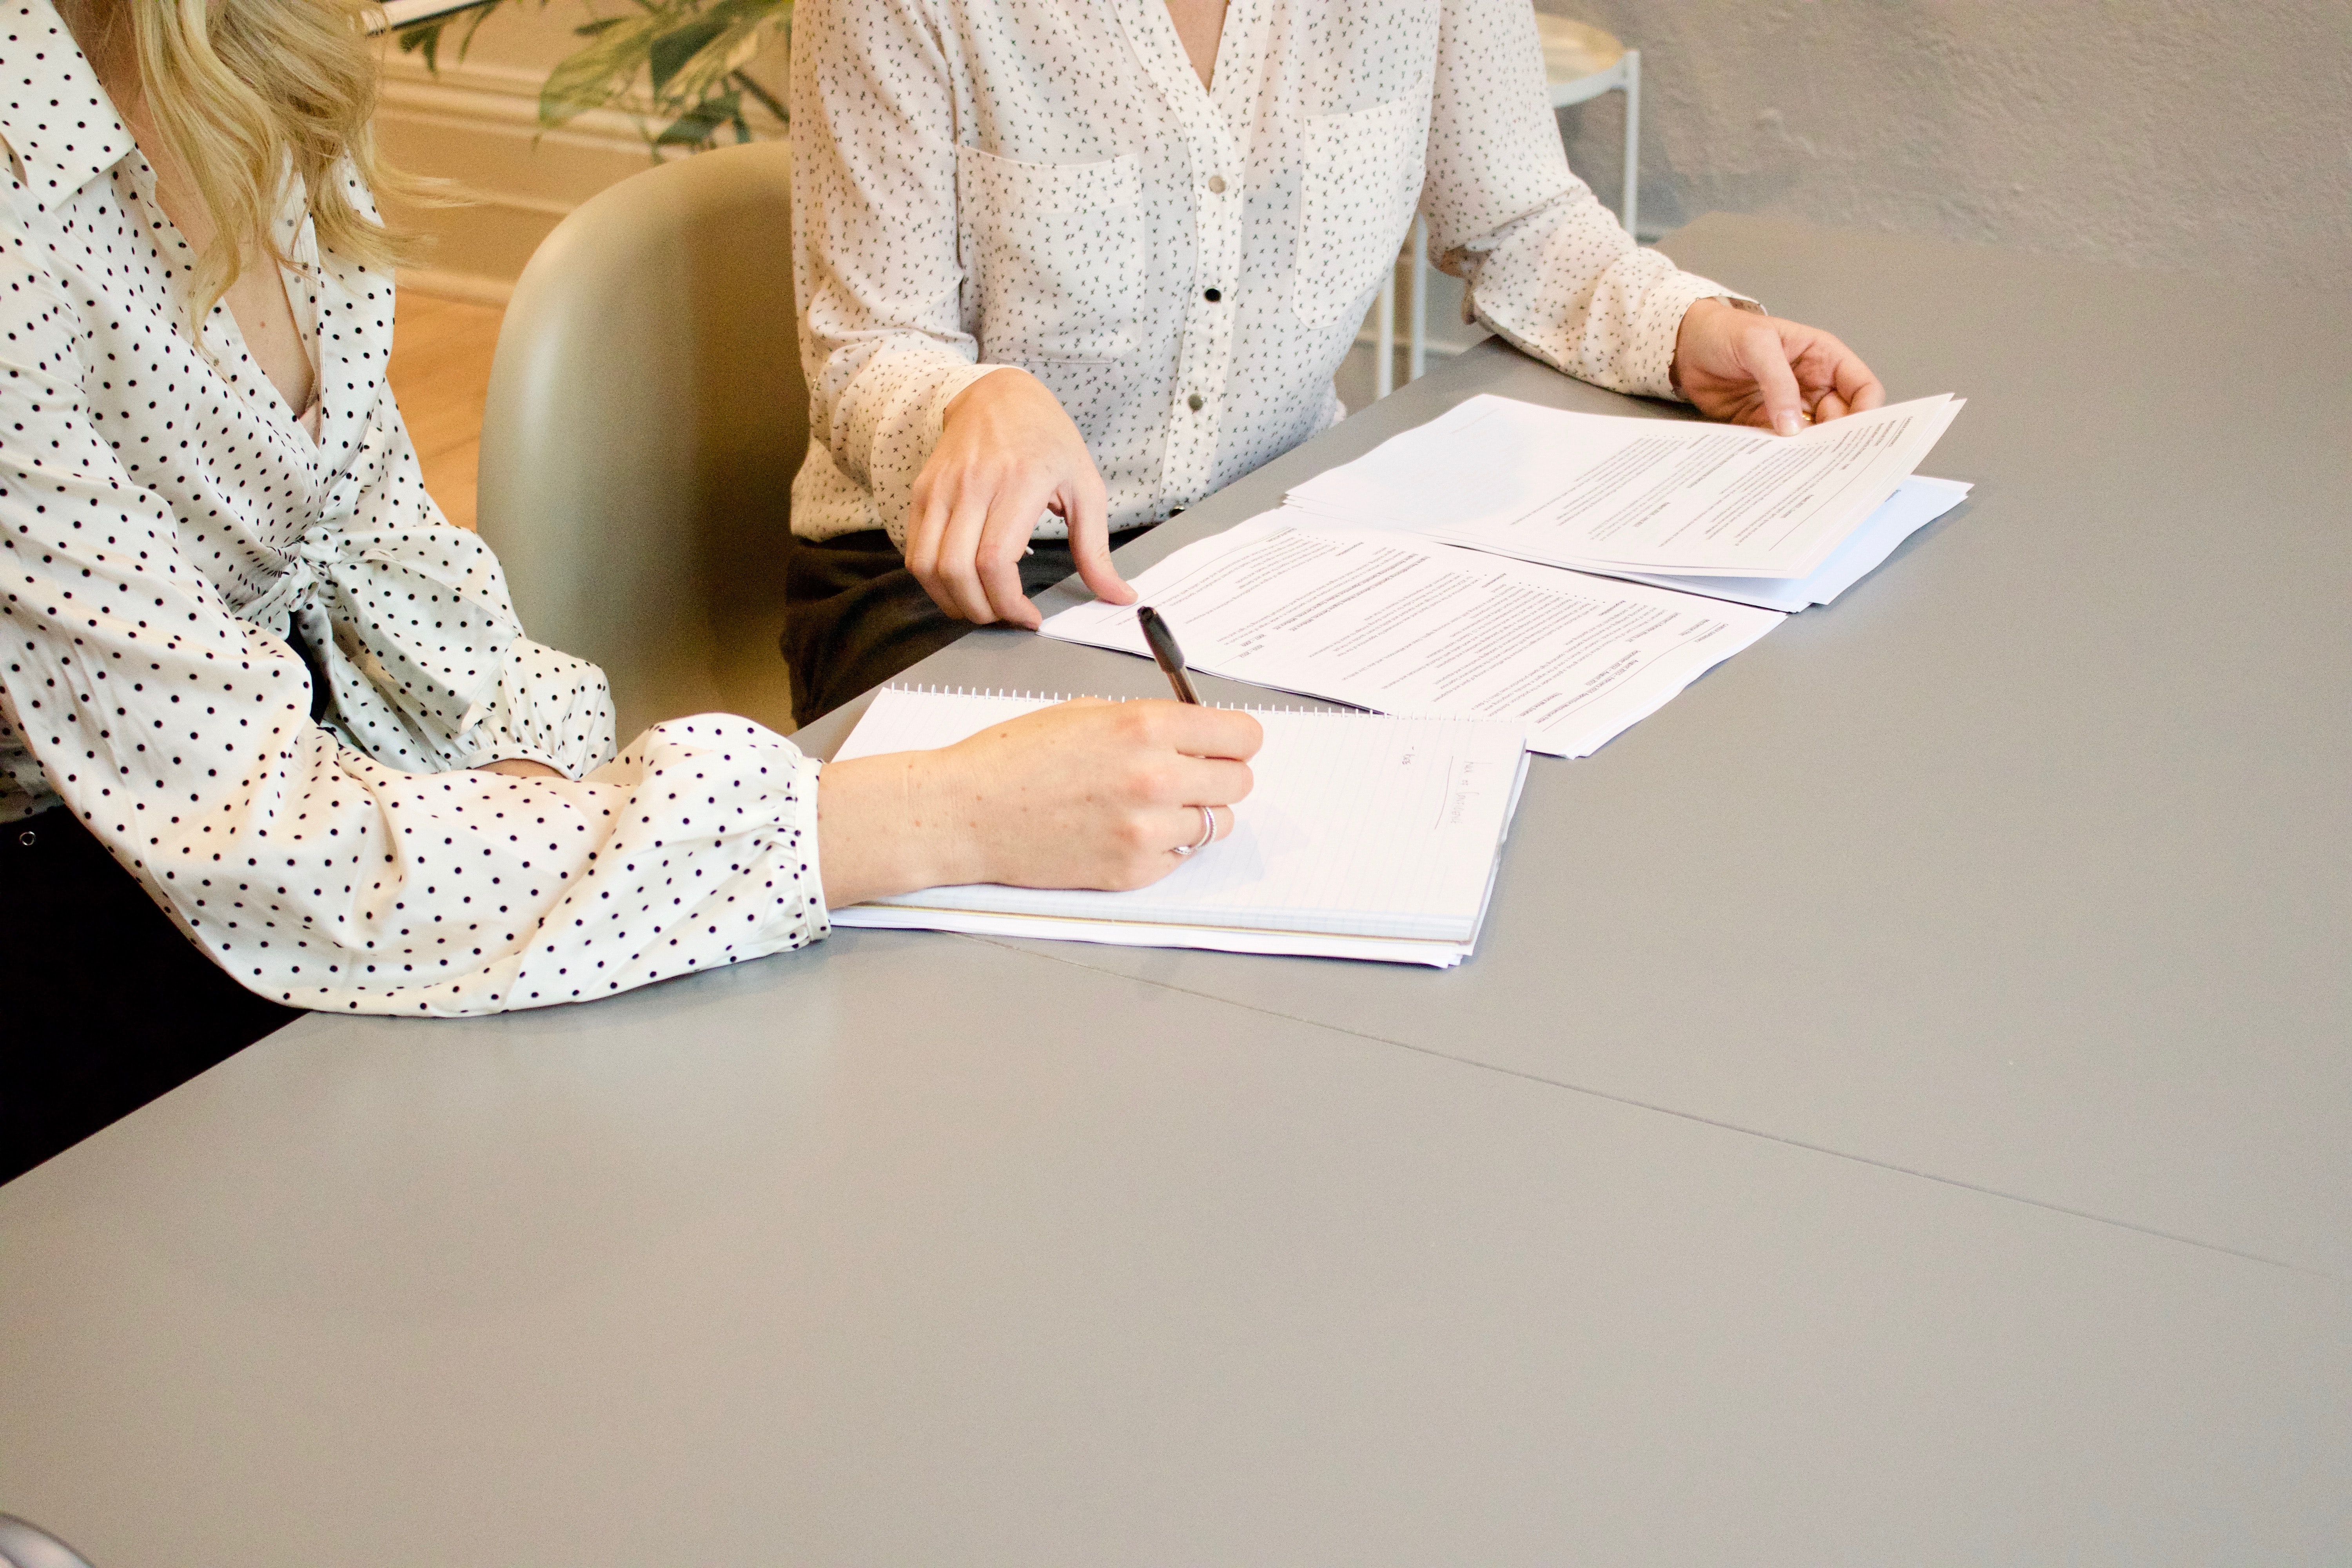 Two women reviewing paperwork; image by Freshh Connection, via Unsplash.com.